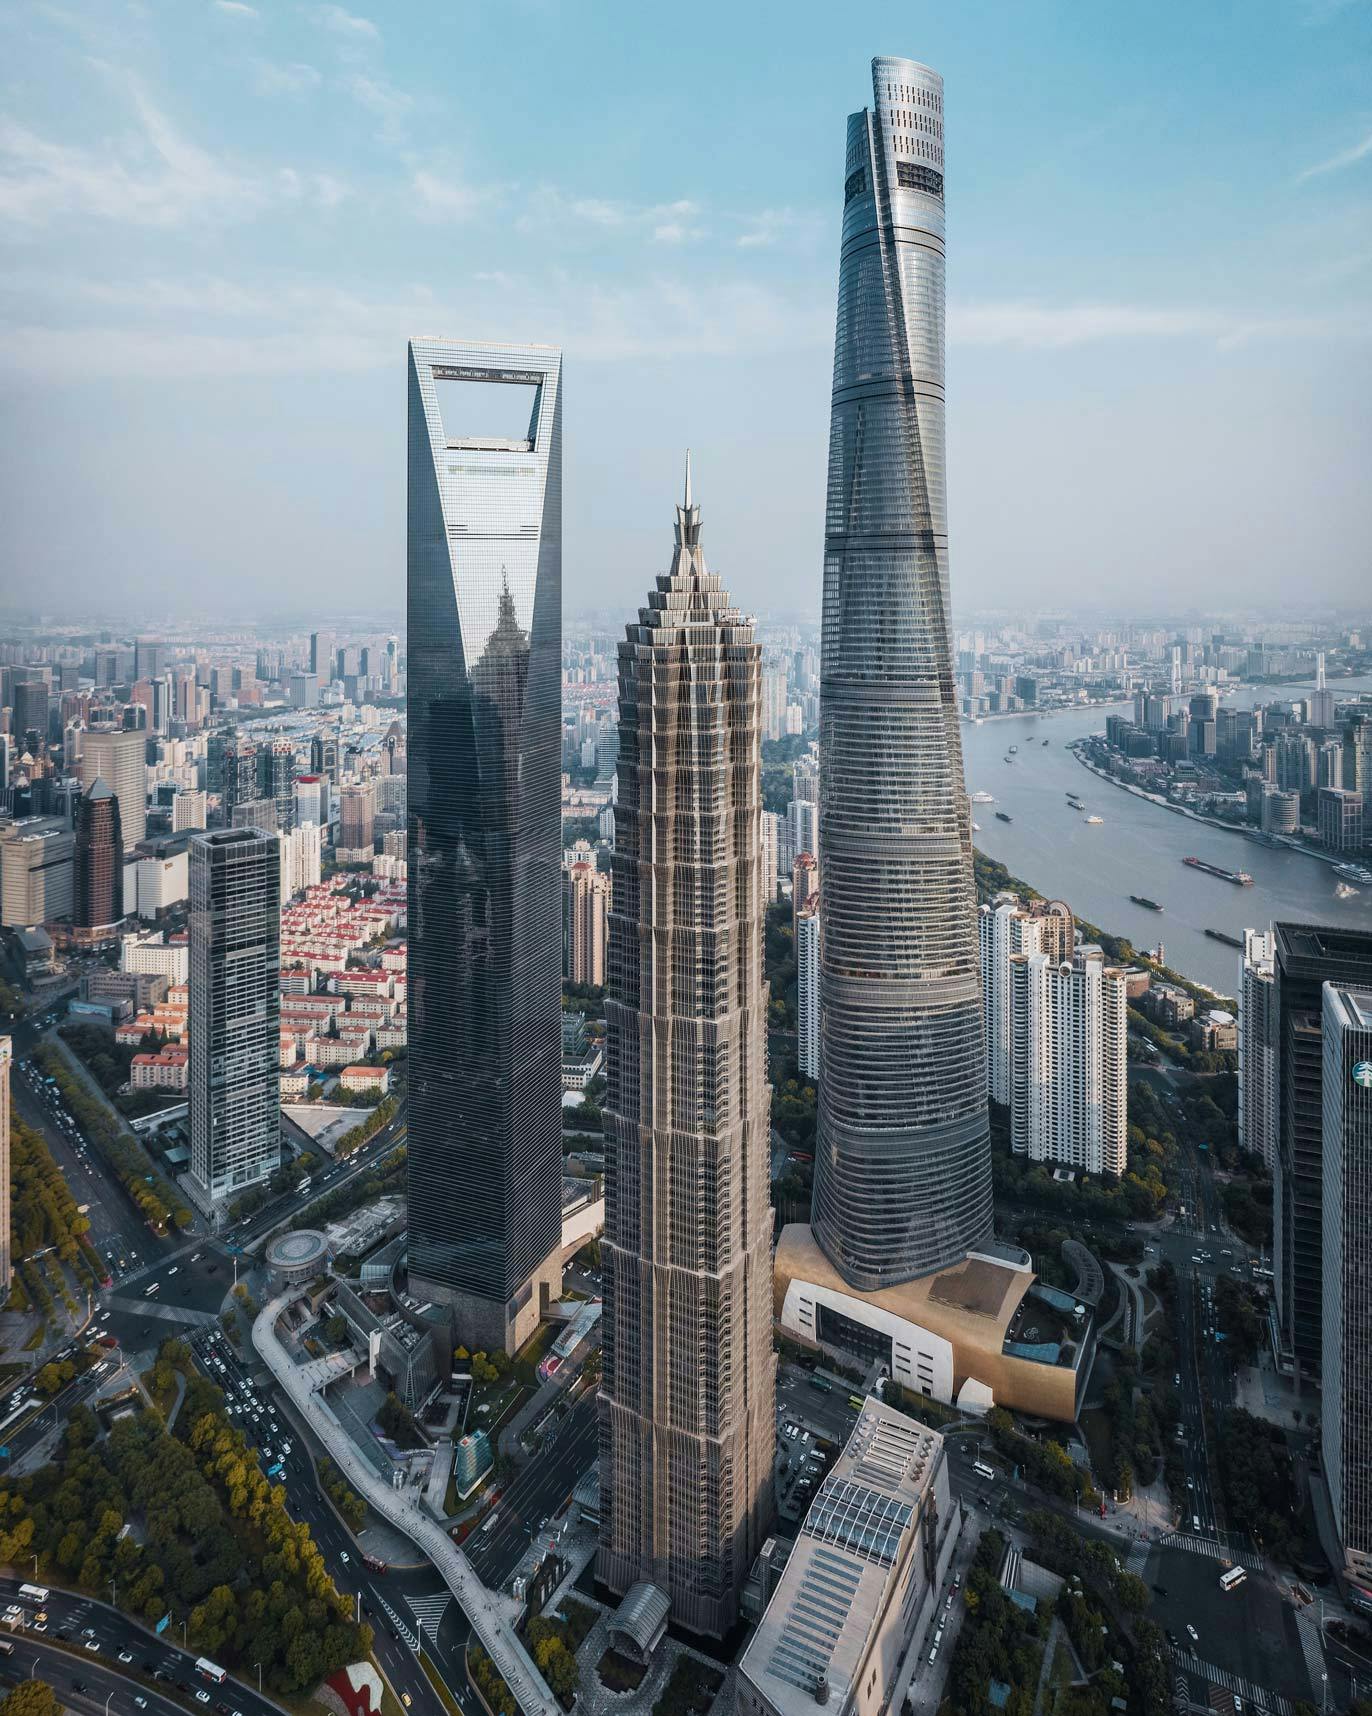 Shanghai World Financial Center, Jin Mao Tower & Shanghai Tower from lawn at Foxxconn Building